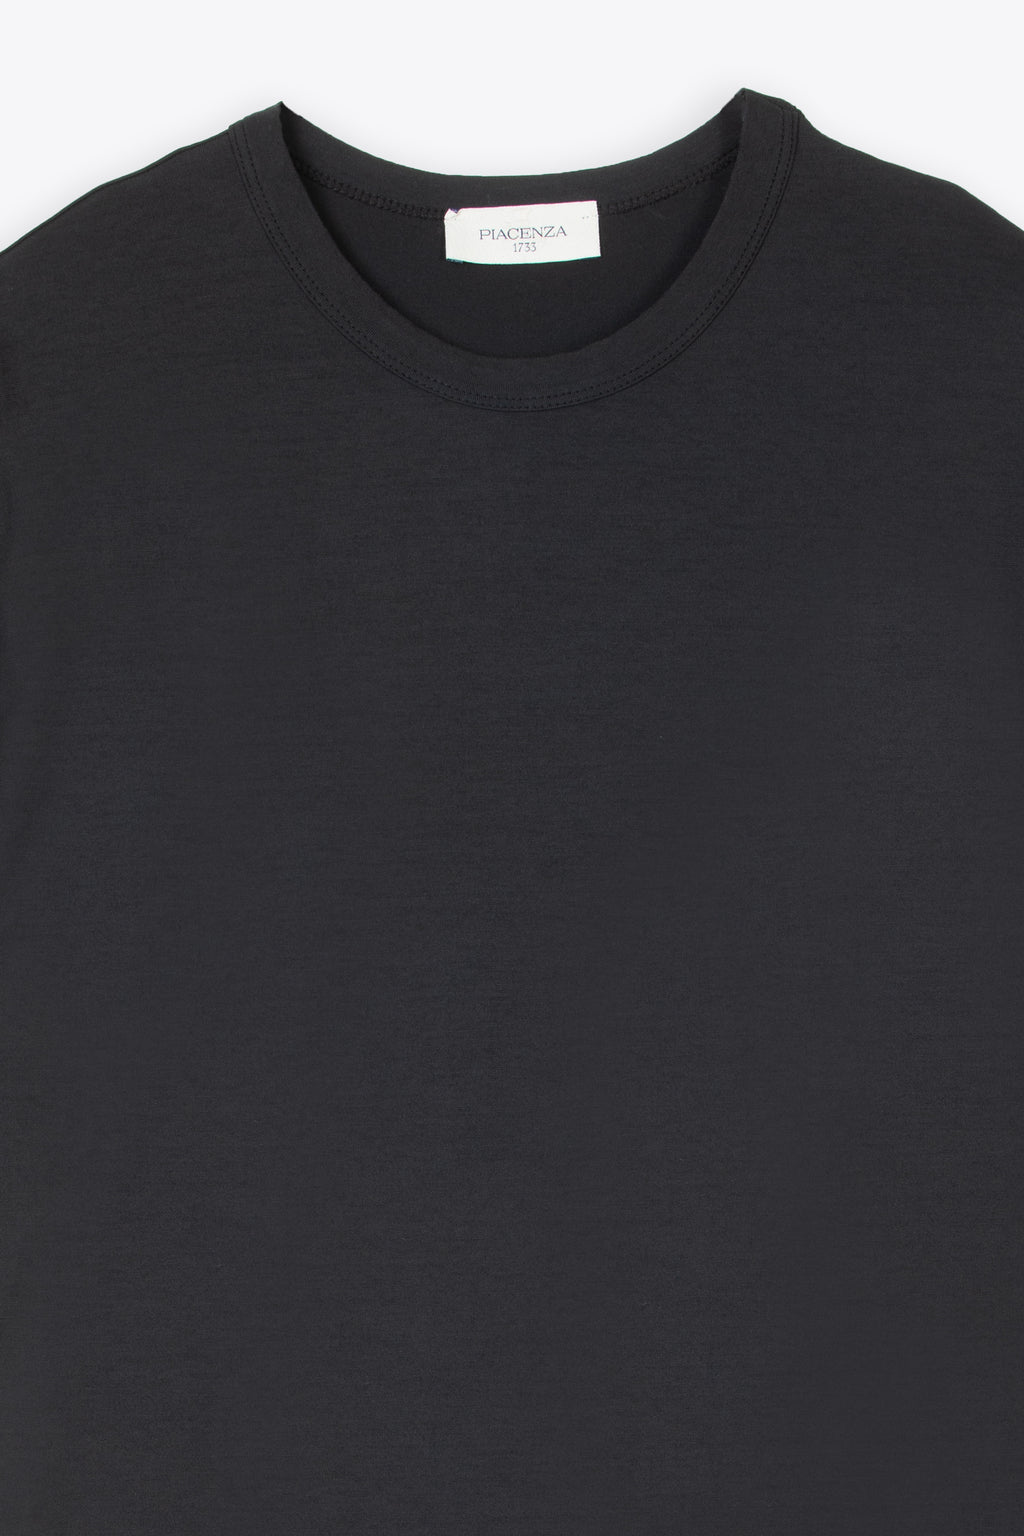 alt-image__T-shirt-nera-in-cotone-leggero